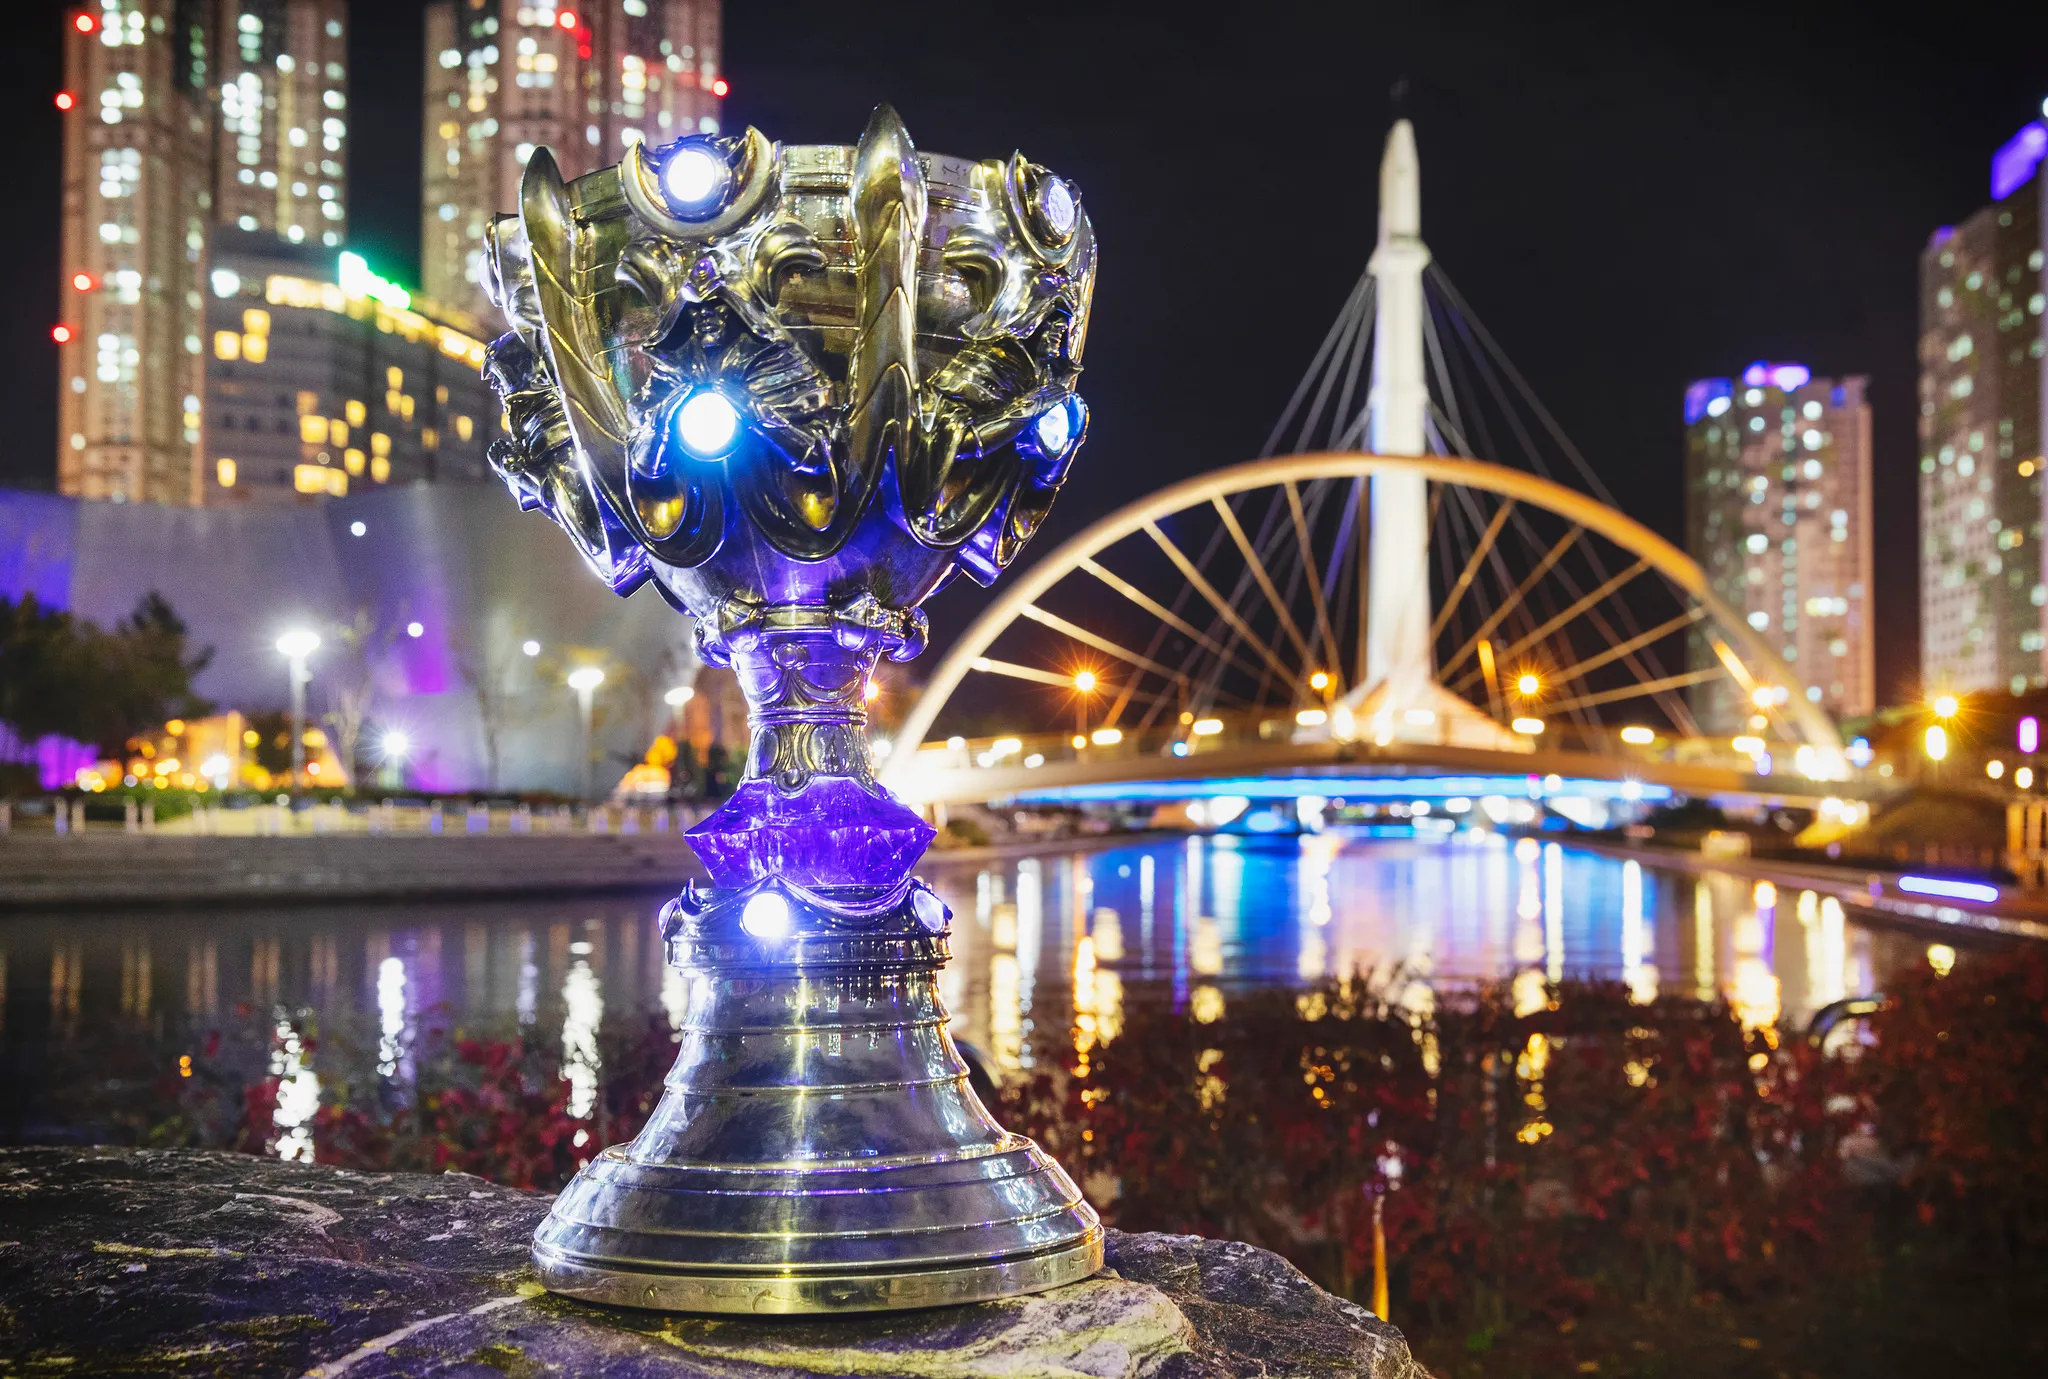 2019 League of Legends World Championship Reaches 100 Million Viewers